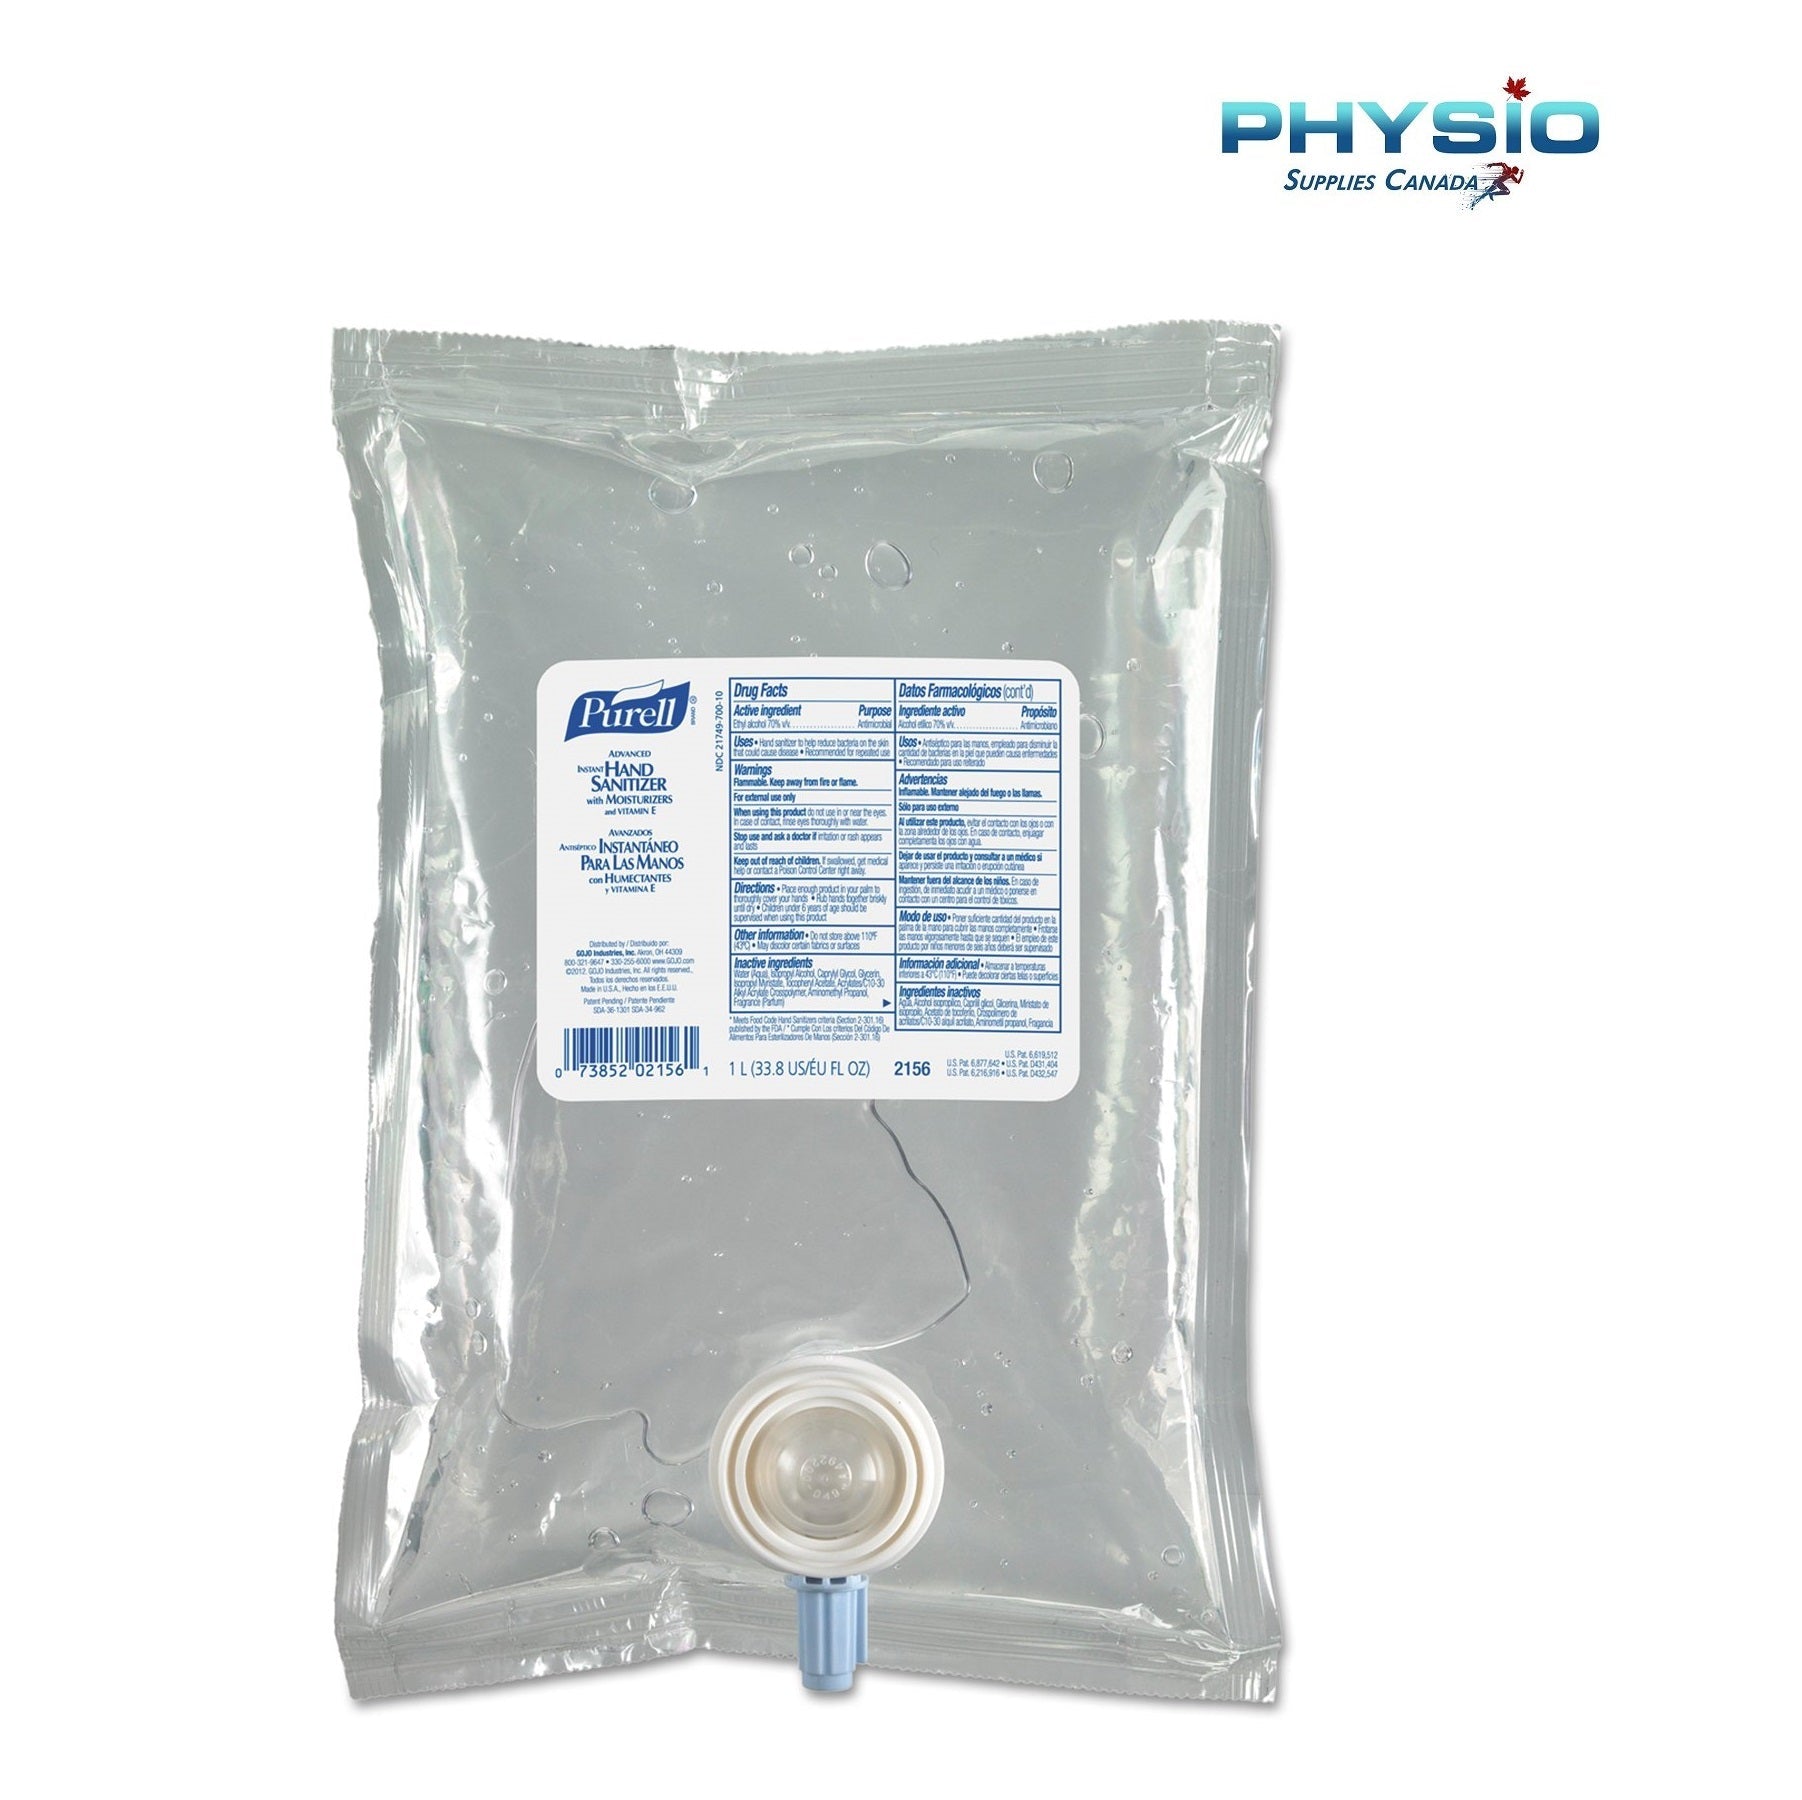 PURELL Advanced Hand Sanitizer Gel 1000 mL Refill - physio supplies canada